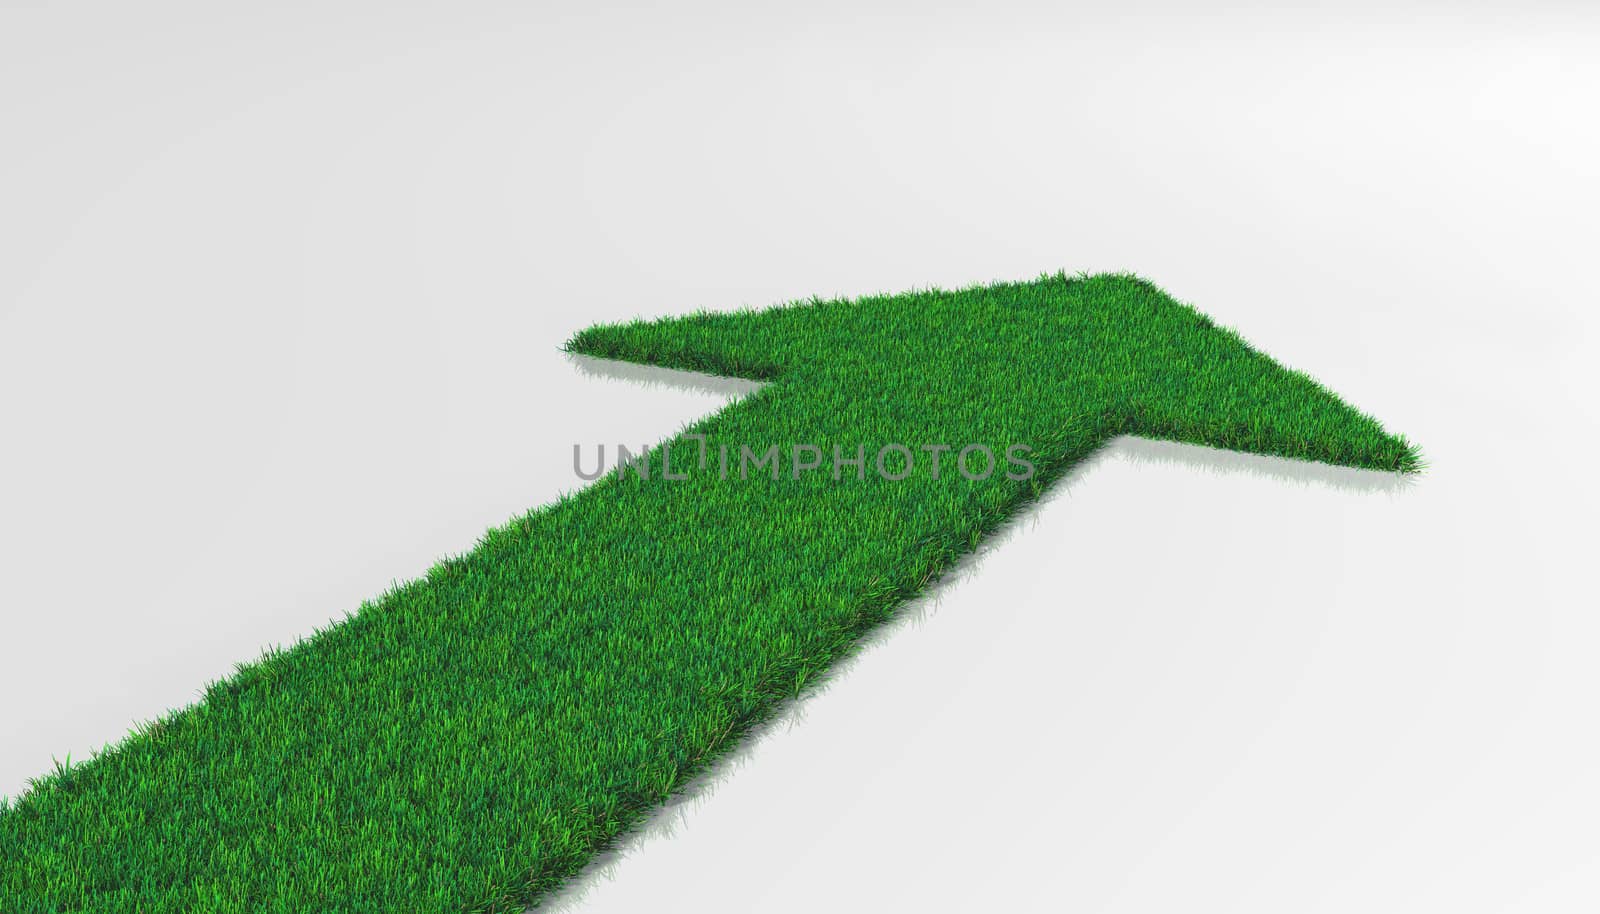 grass carpet with arrow by TaiChesco